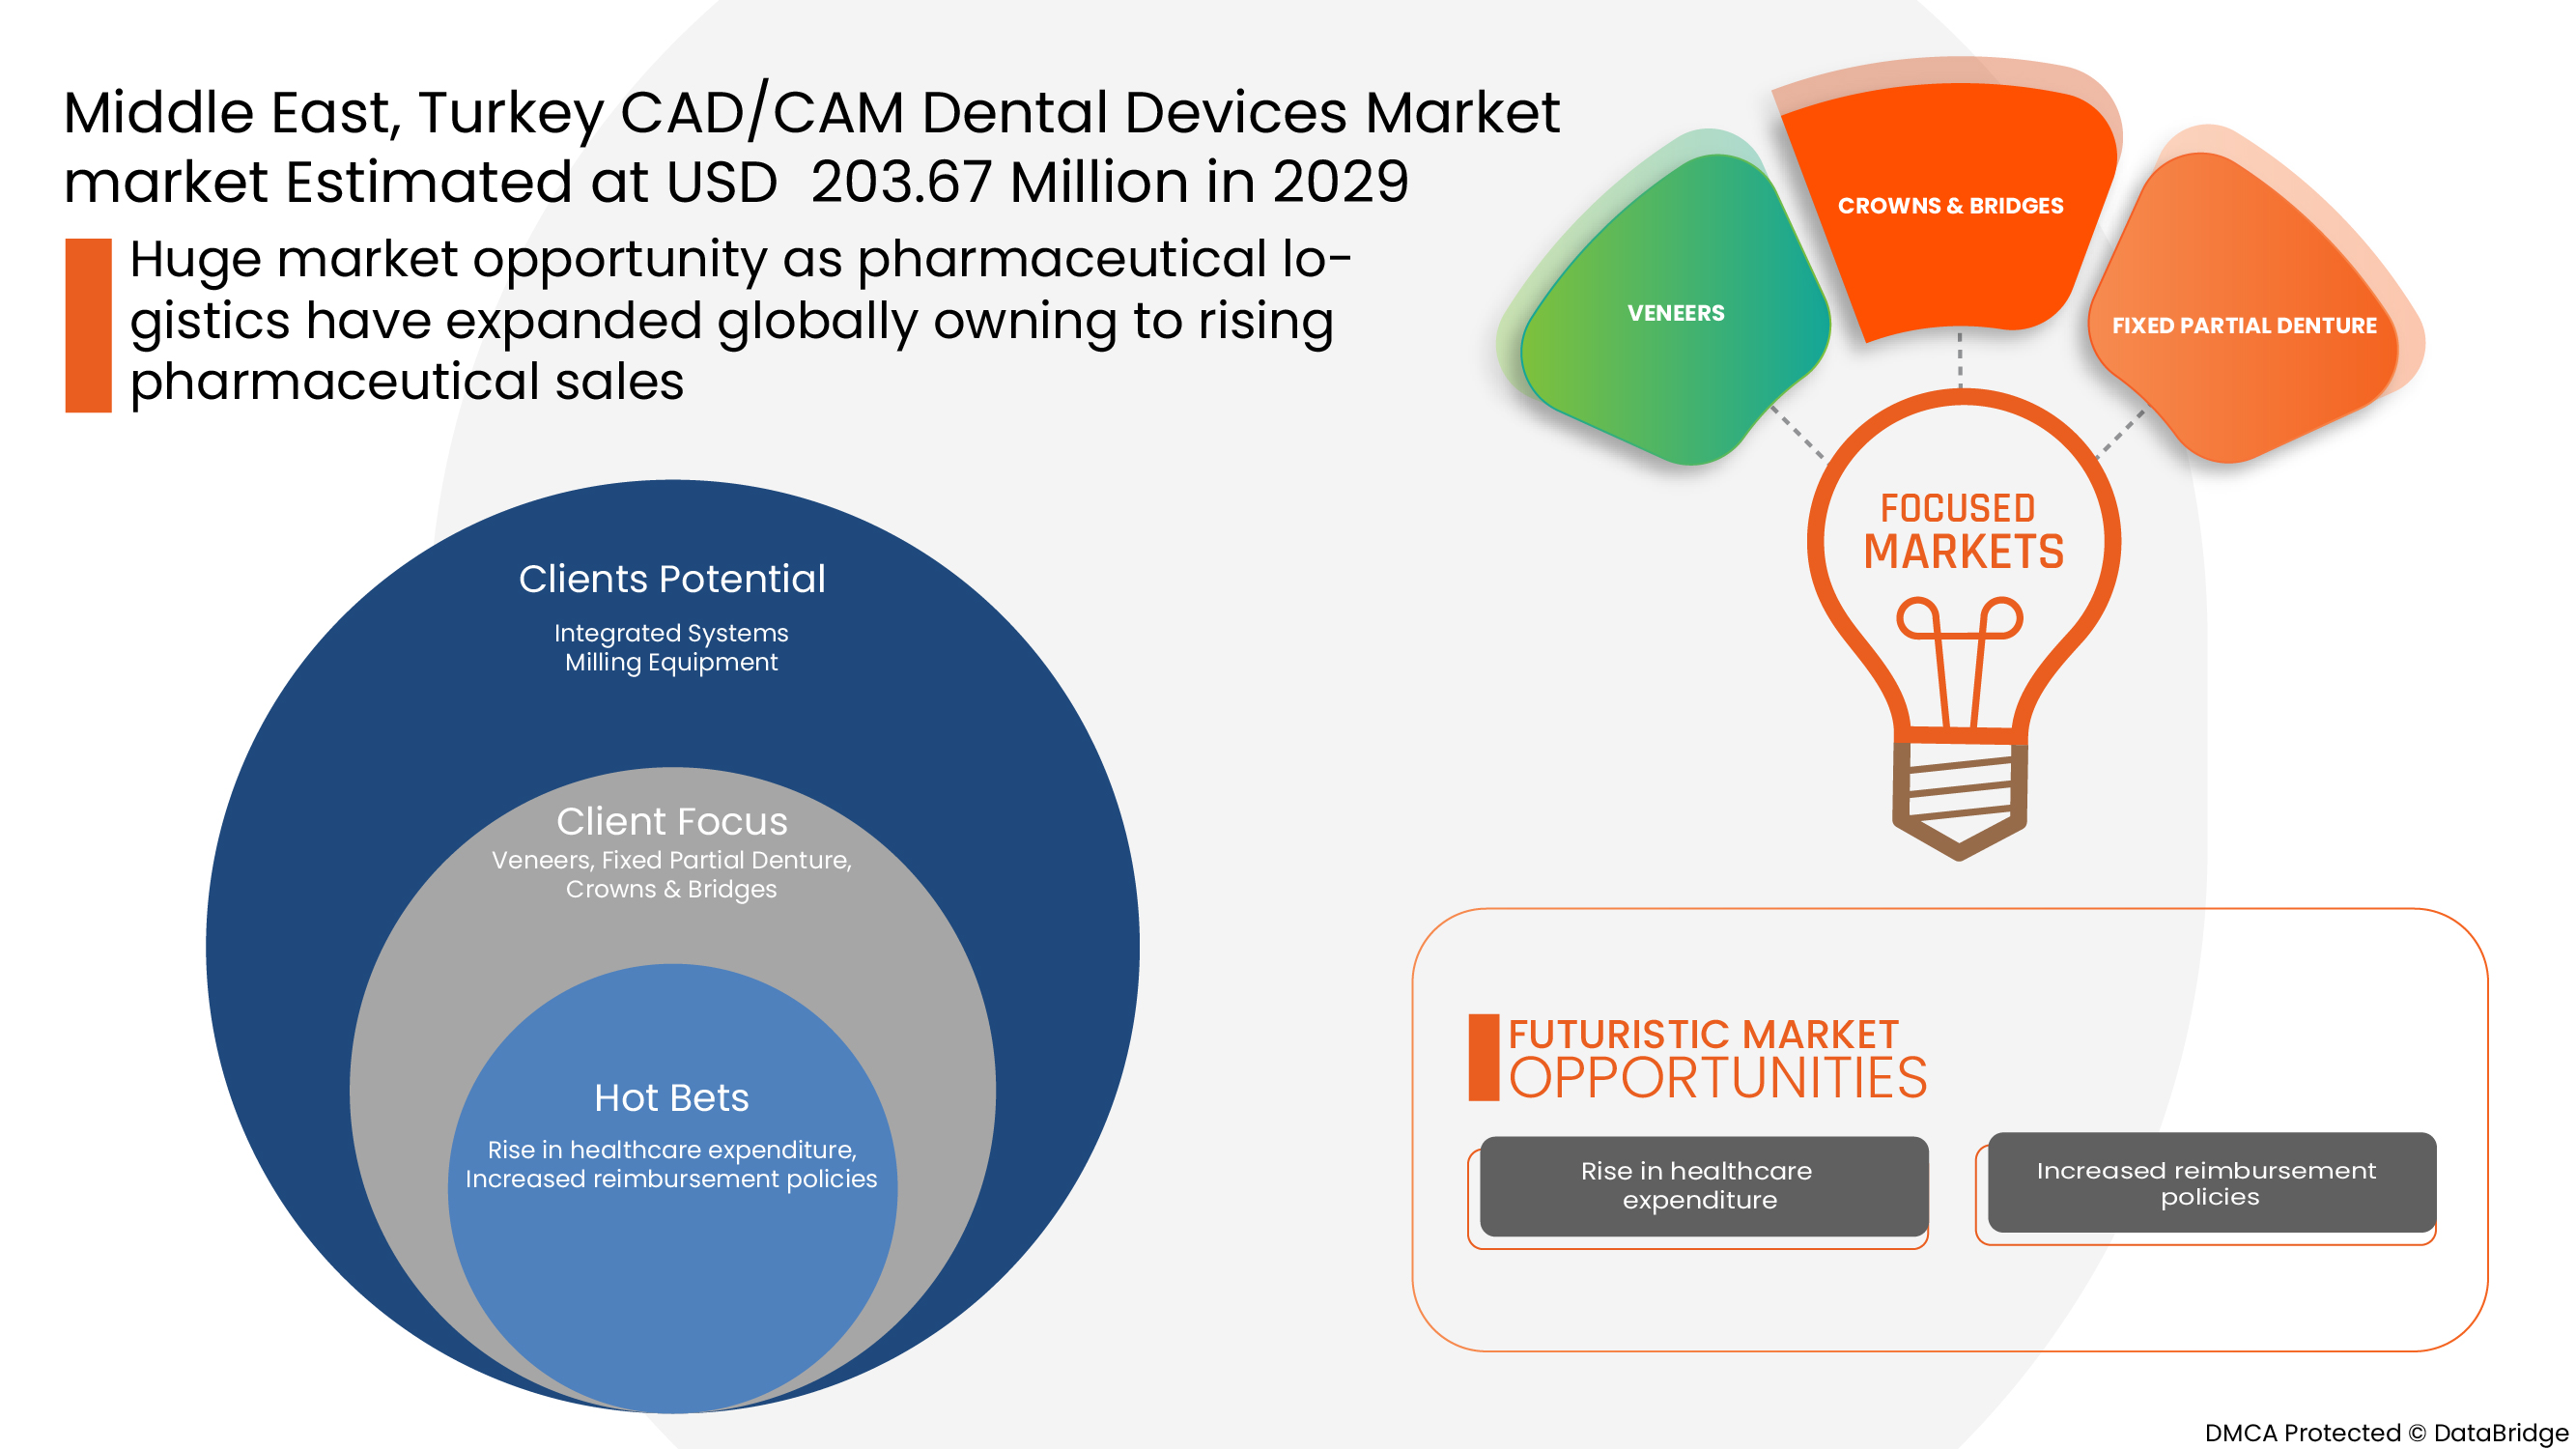 Middle East, Turkey Cad/Cam Dental Devices Market